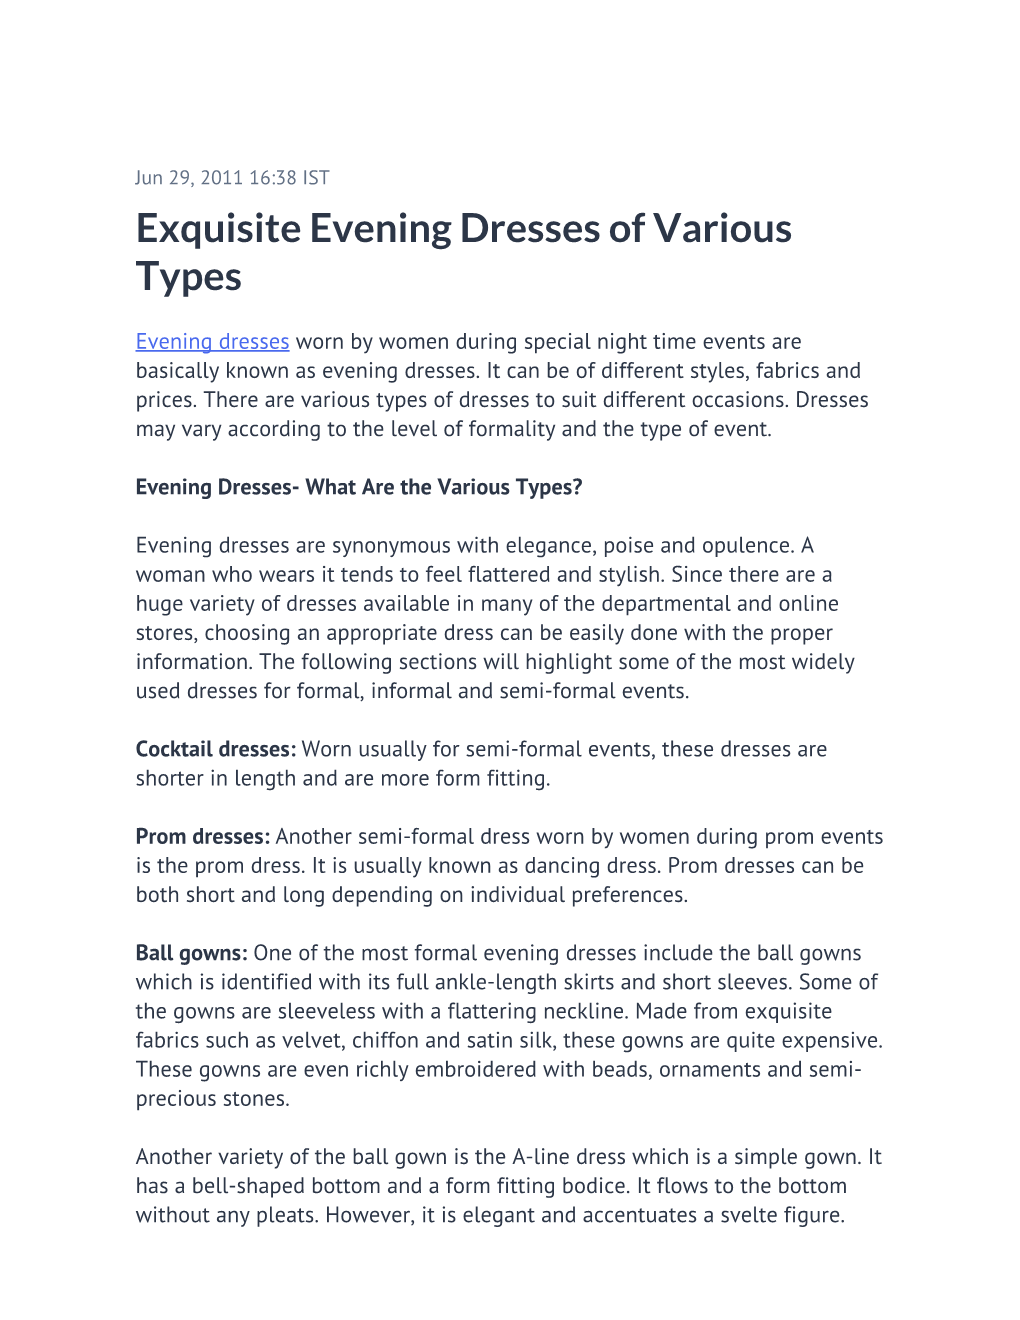 Exquisite Evening Dresses of Various Types